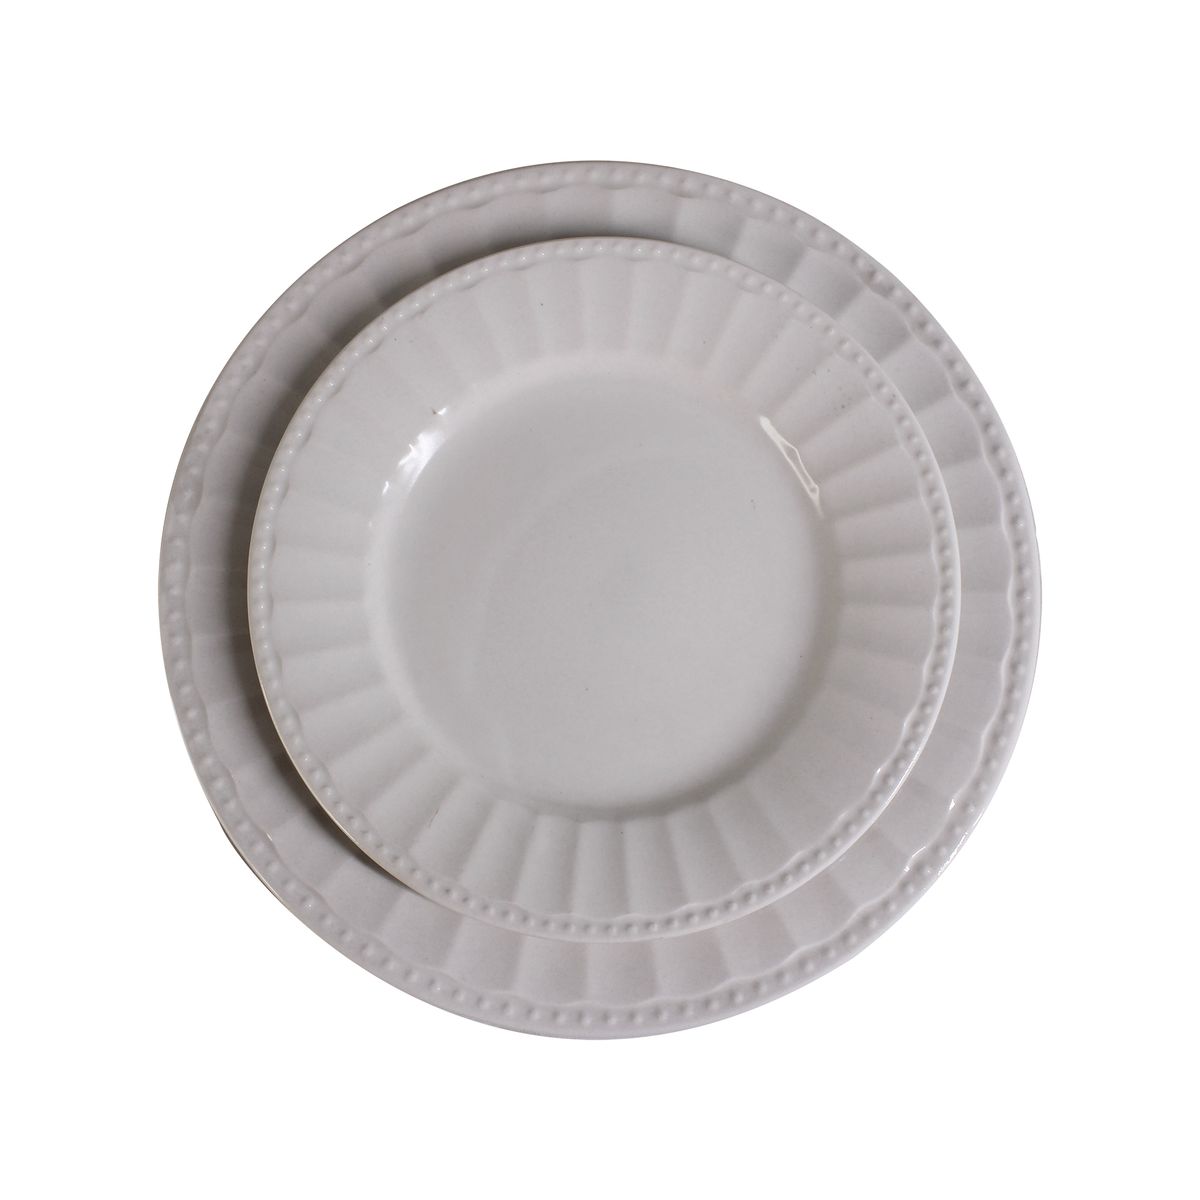 16 Piece Round Ceramic Dinner Set - Off White with Bead LineTrim - PC06